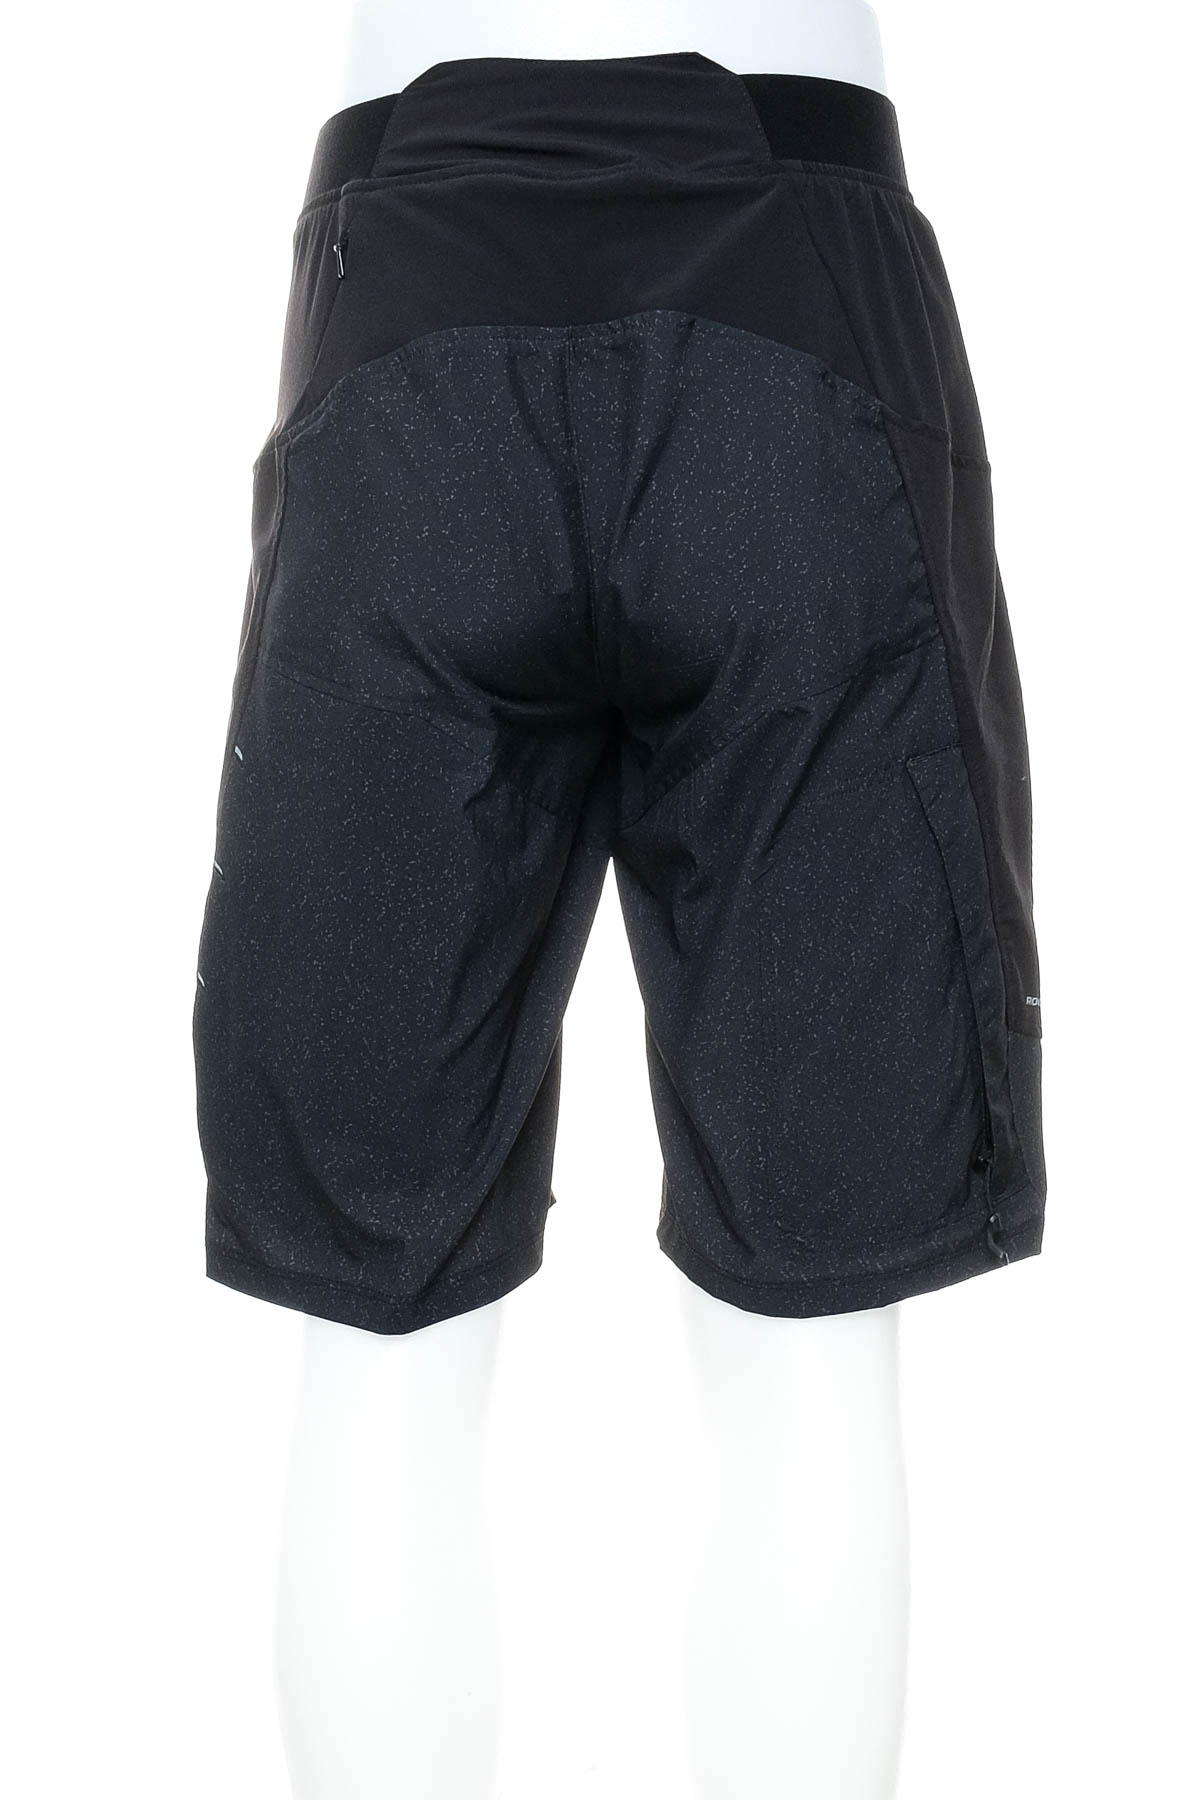 Men's shorts - Rockrider x DECATHLON - 1